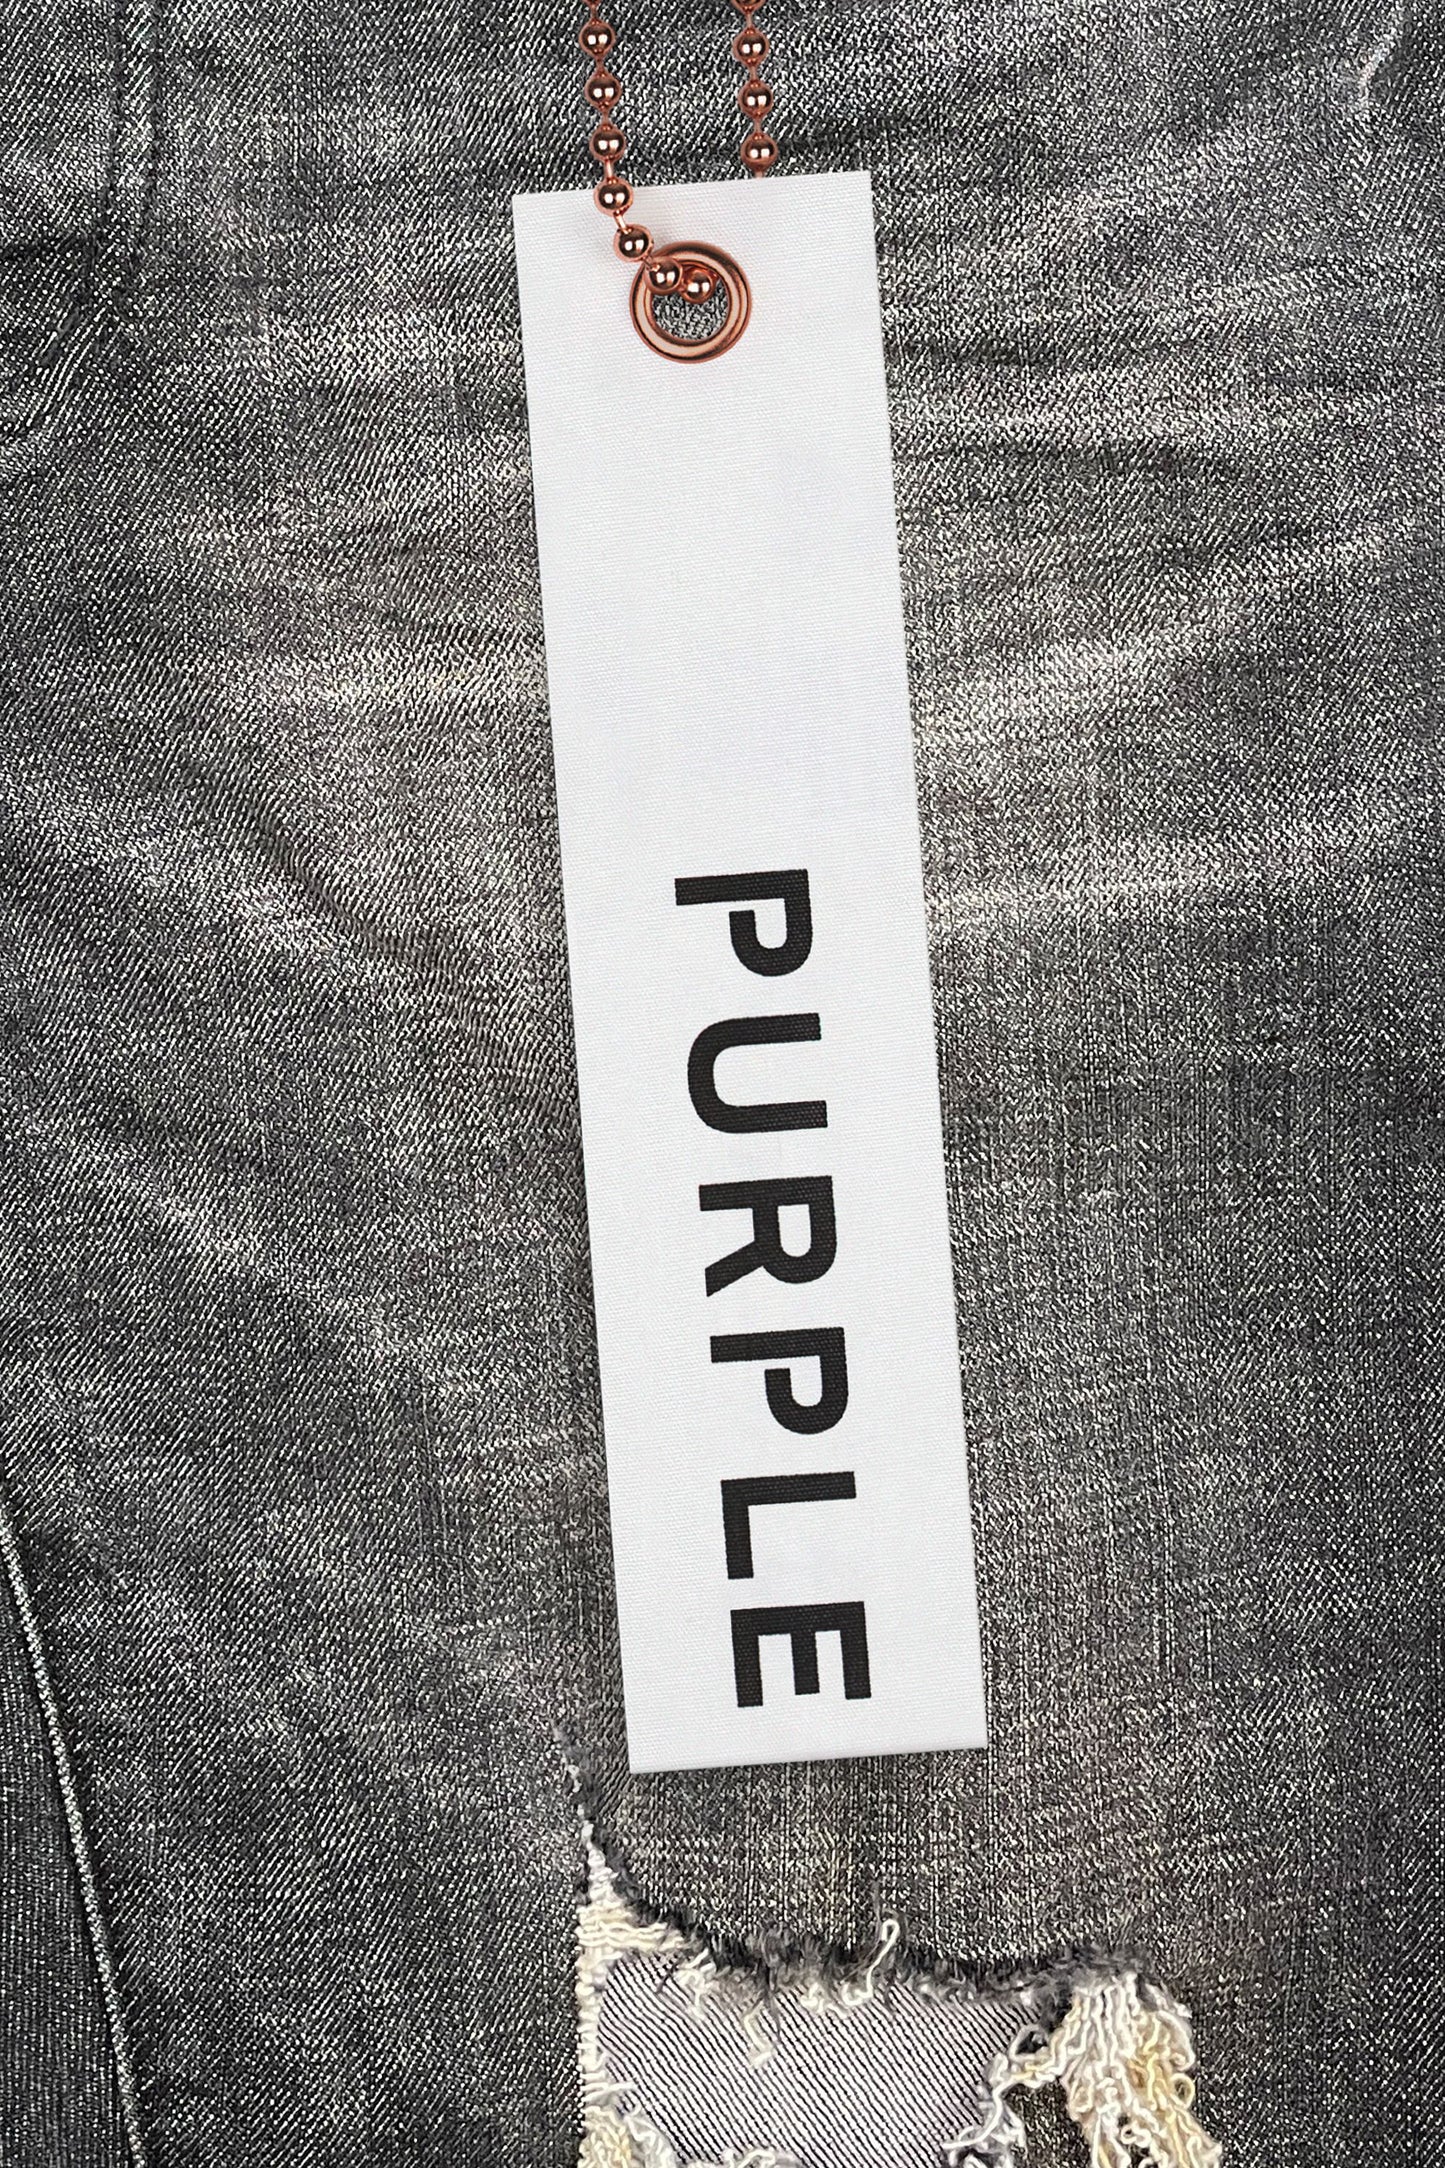 PURPLE BRAND - Men's Denim Jean - Low Rise Skinny - Style No. P001 - Exclusive Grey Wash Distress - Hang tag